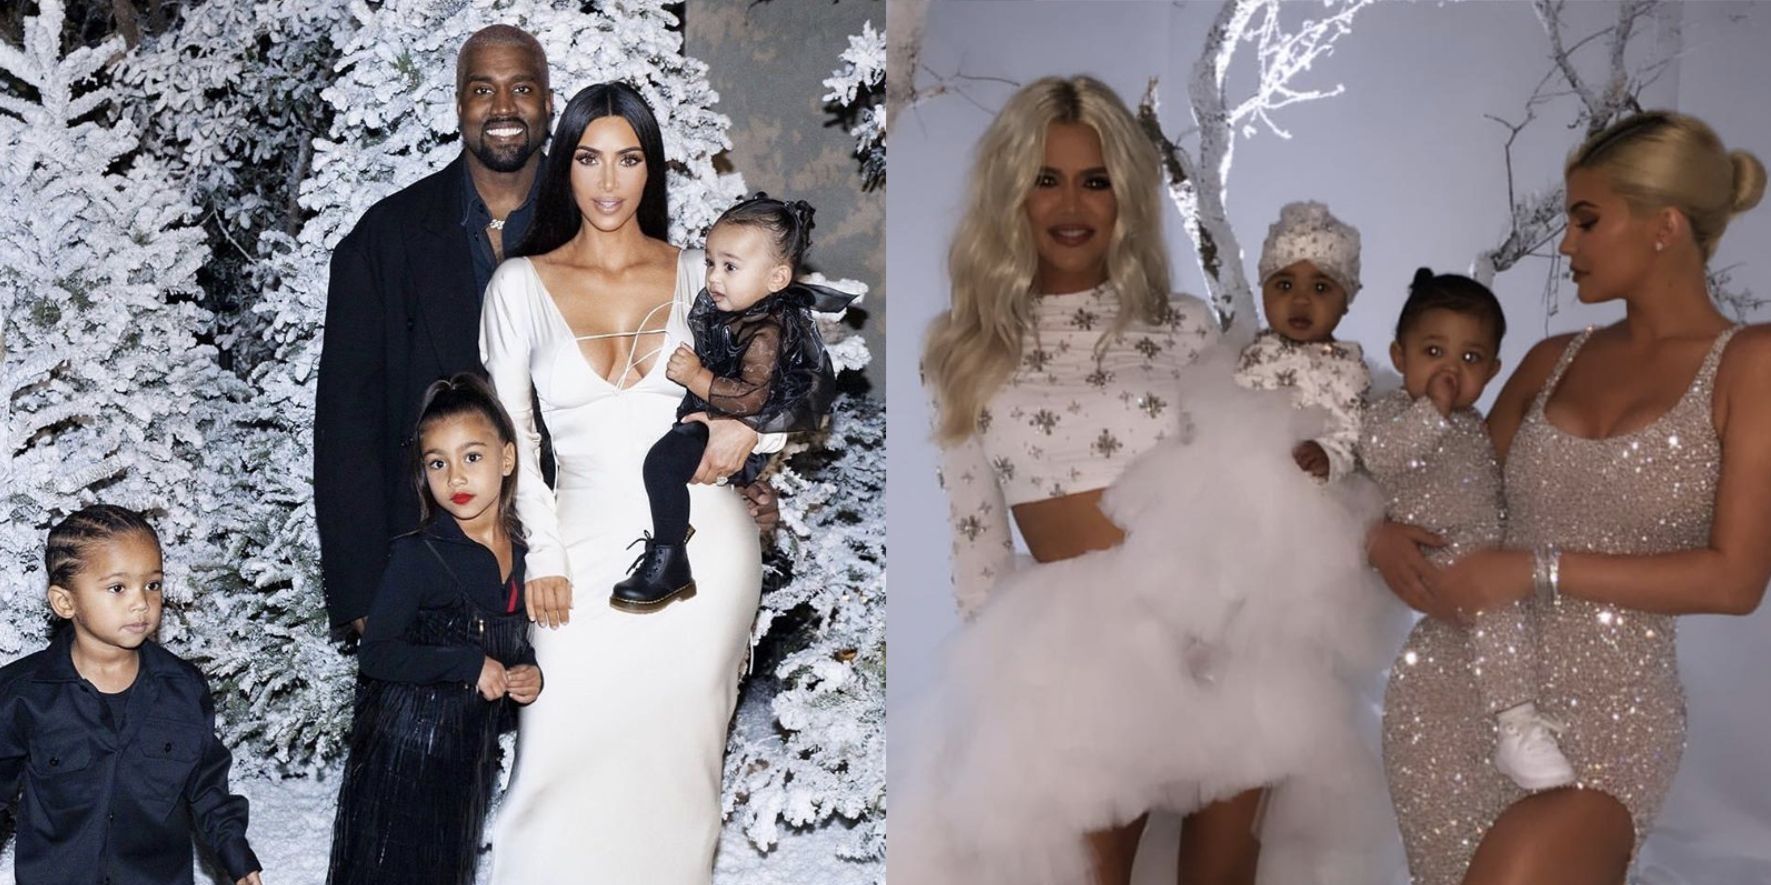 The Kardashian family Christmas in 2018